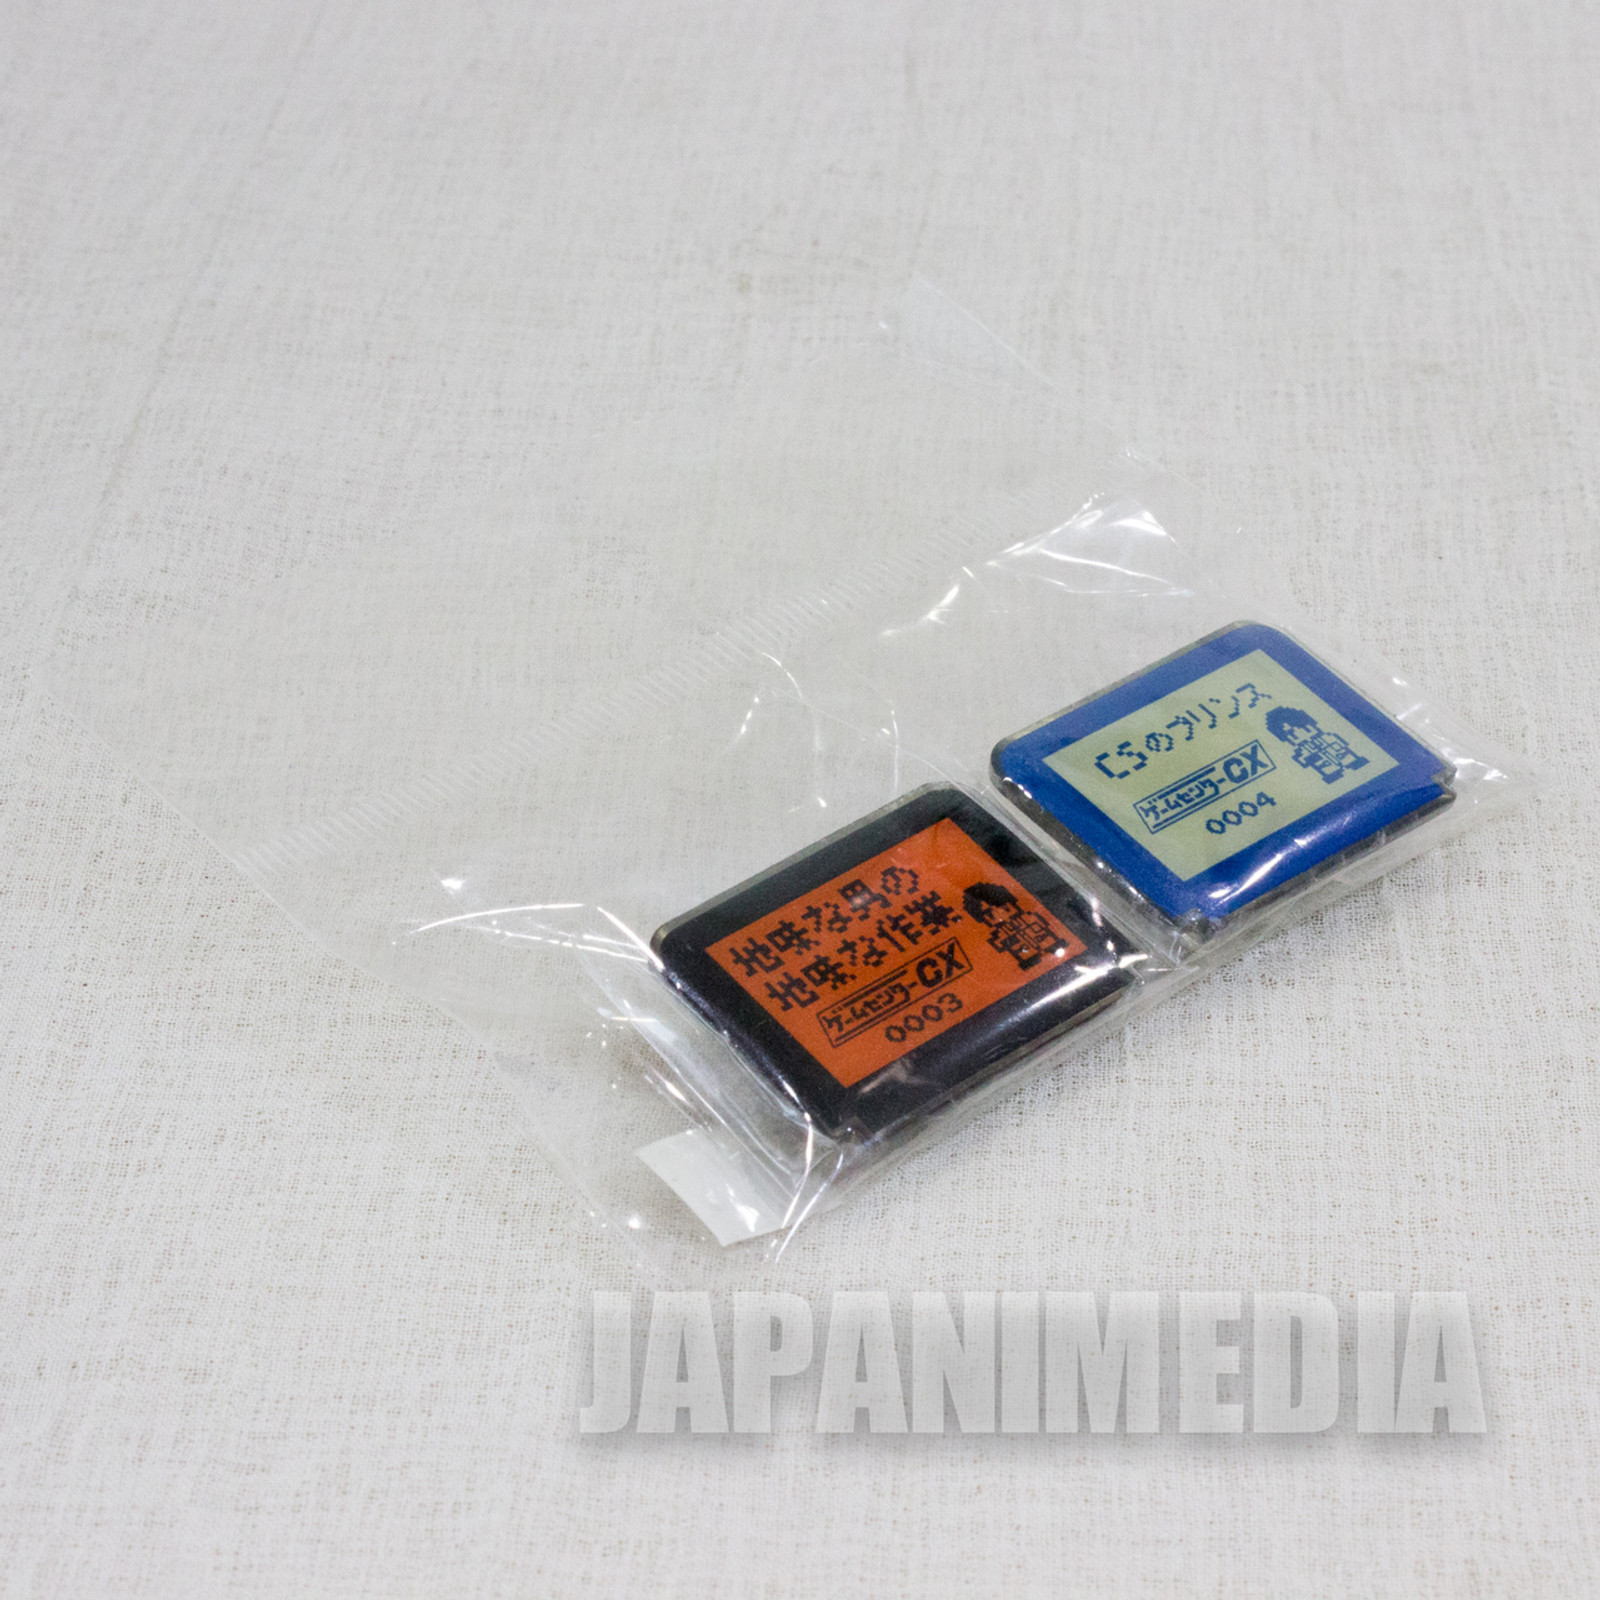 Game Center CX Character Pins 2pc Set #2 JAPAN ARINO KACHO